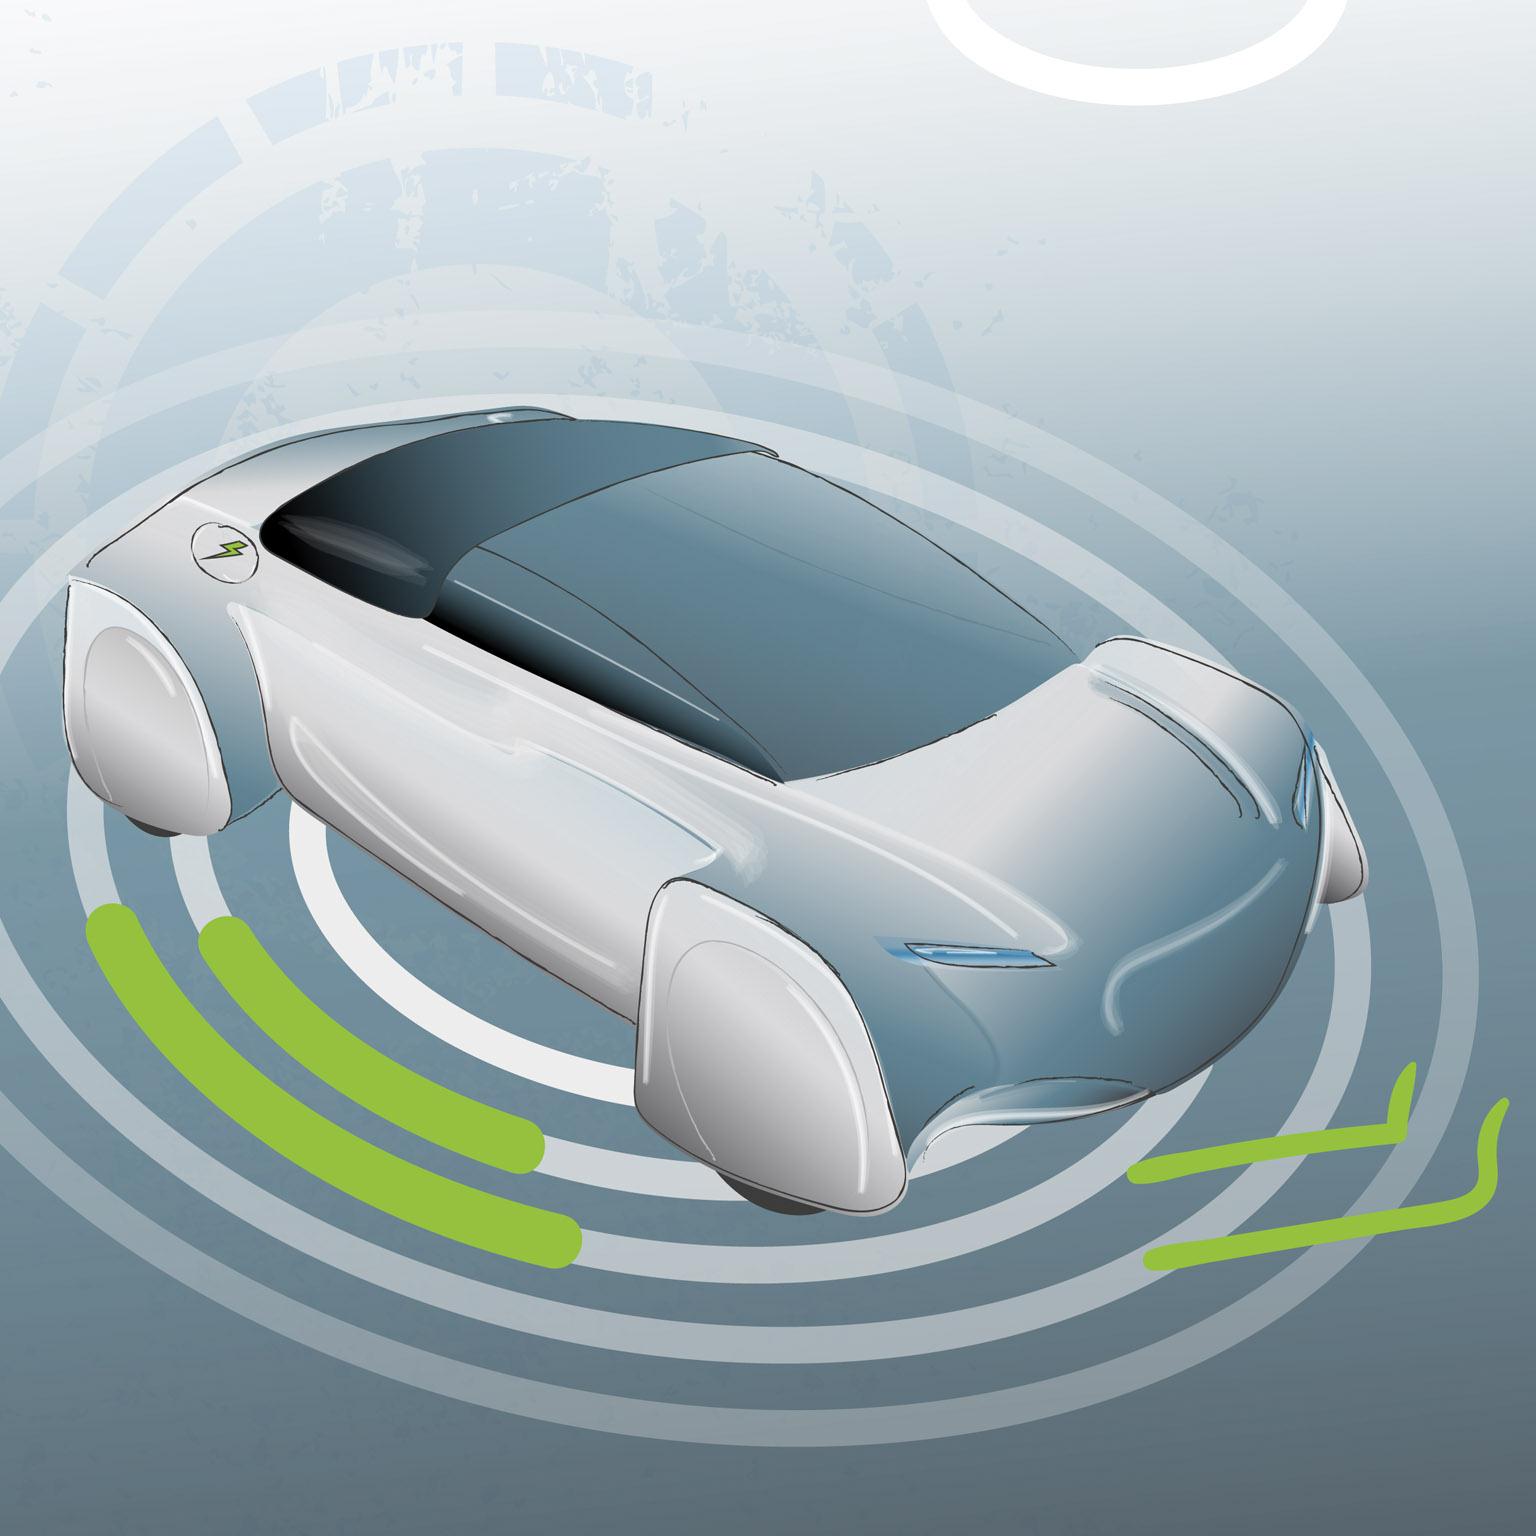 10 revolutionary technologies disrupting the automotive industry